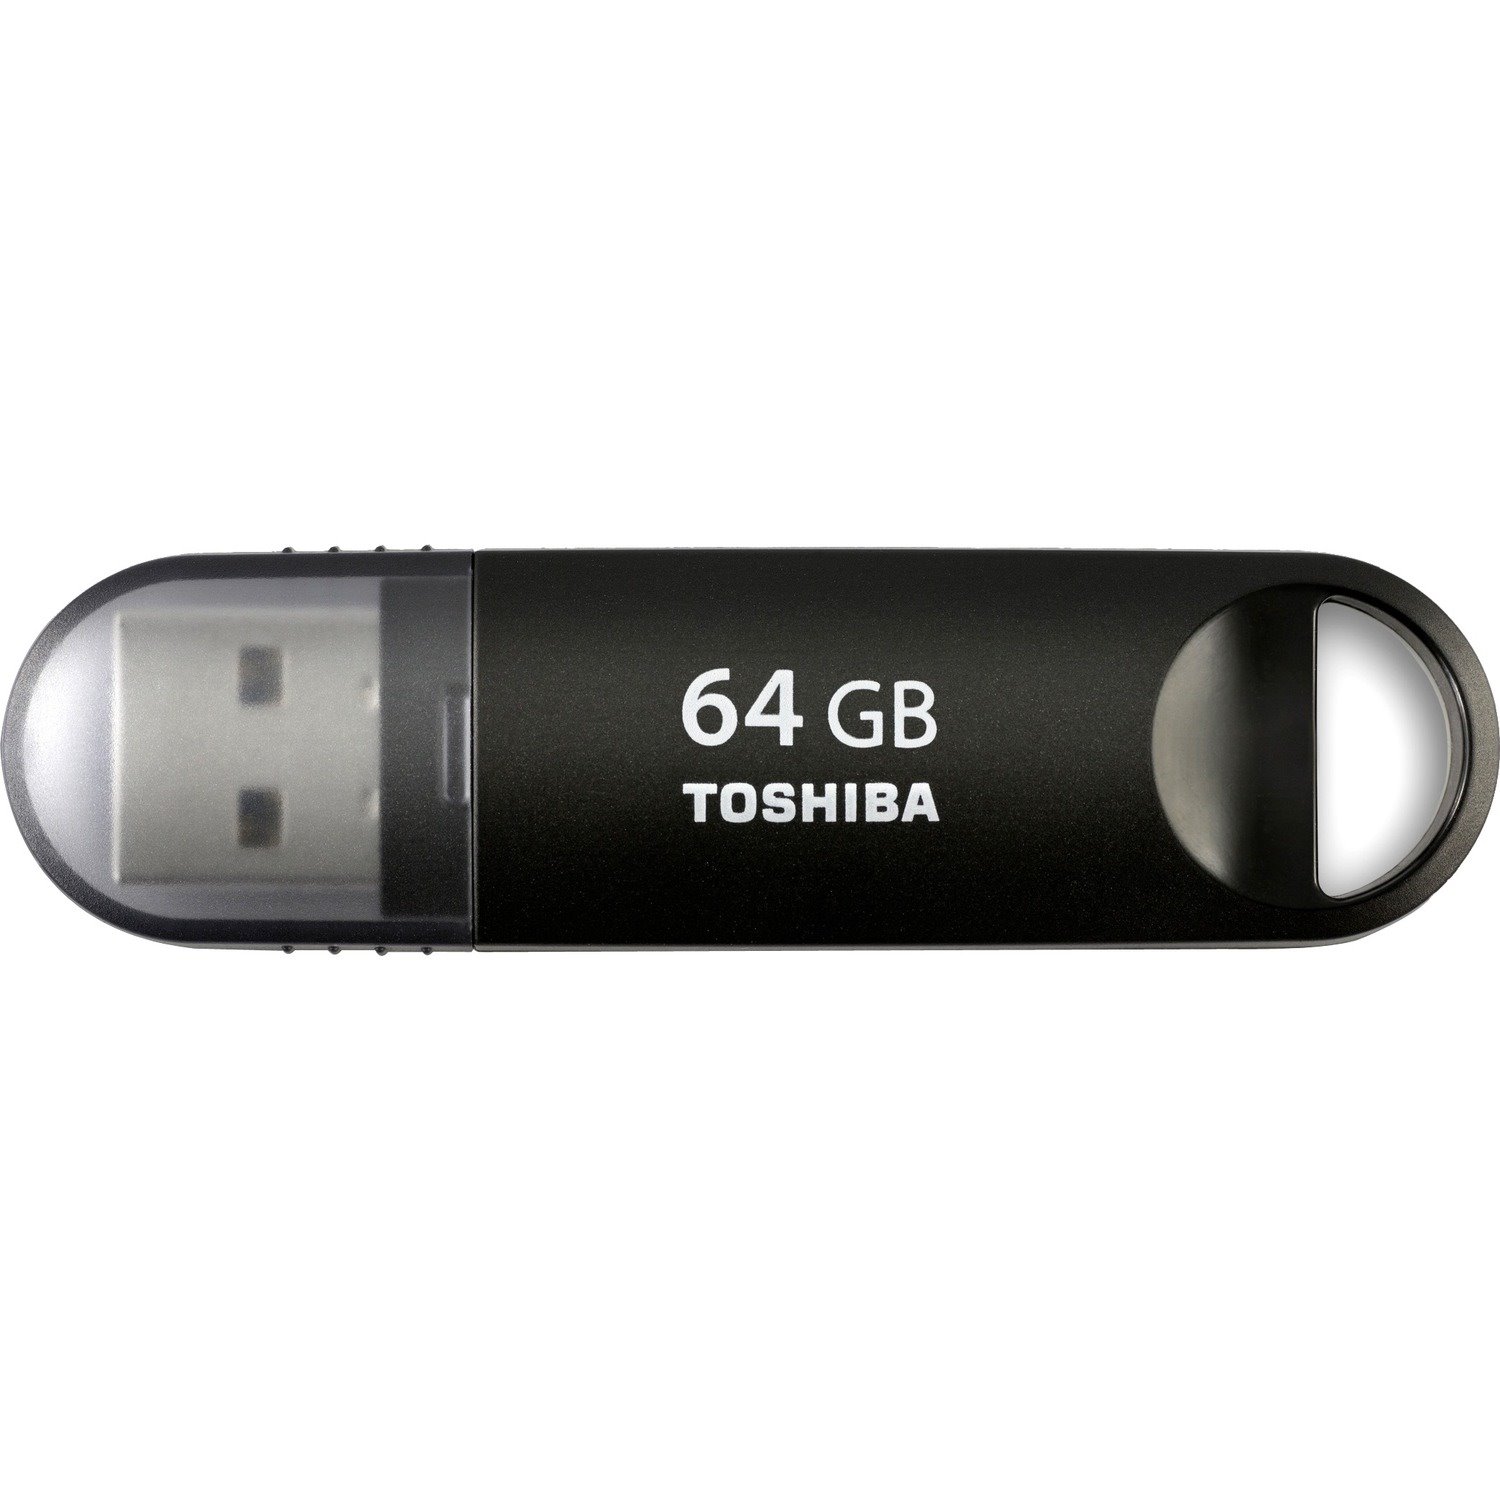 Toshiba TransMemory-MX 64 GB USB 3.0 Flash Drive - Black